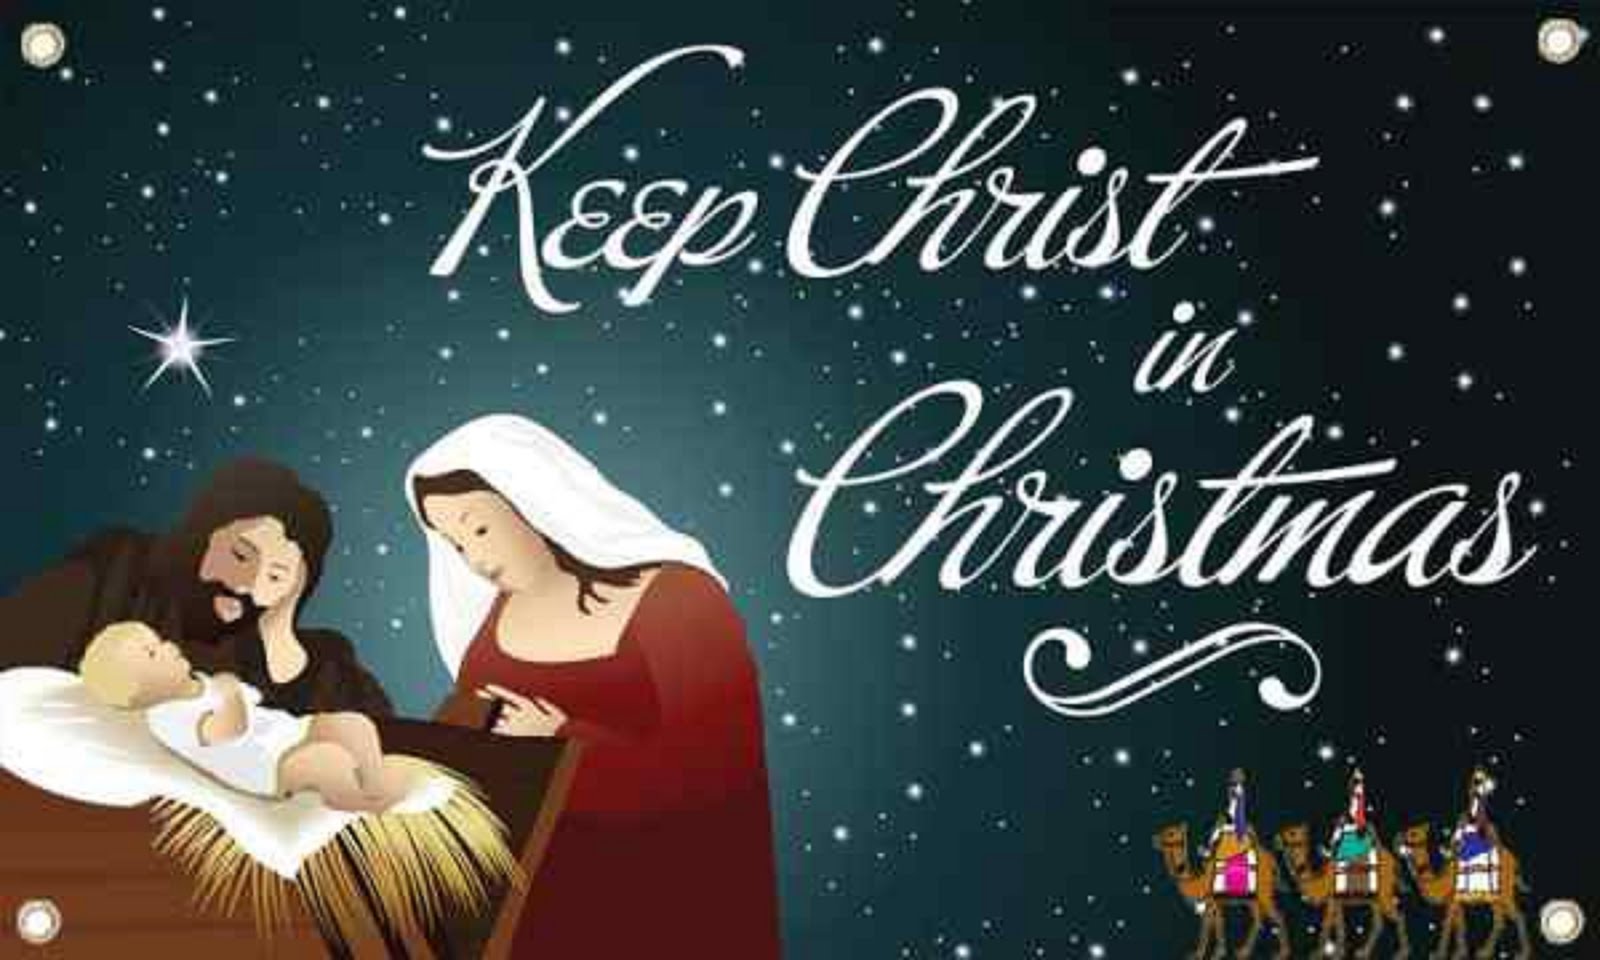 HELP KEEP CHRIST IN CHRISTMAS